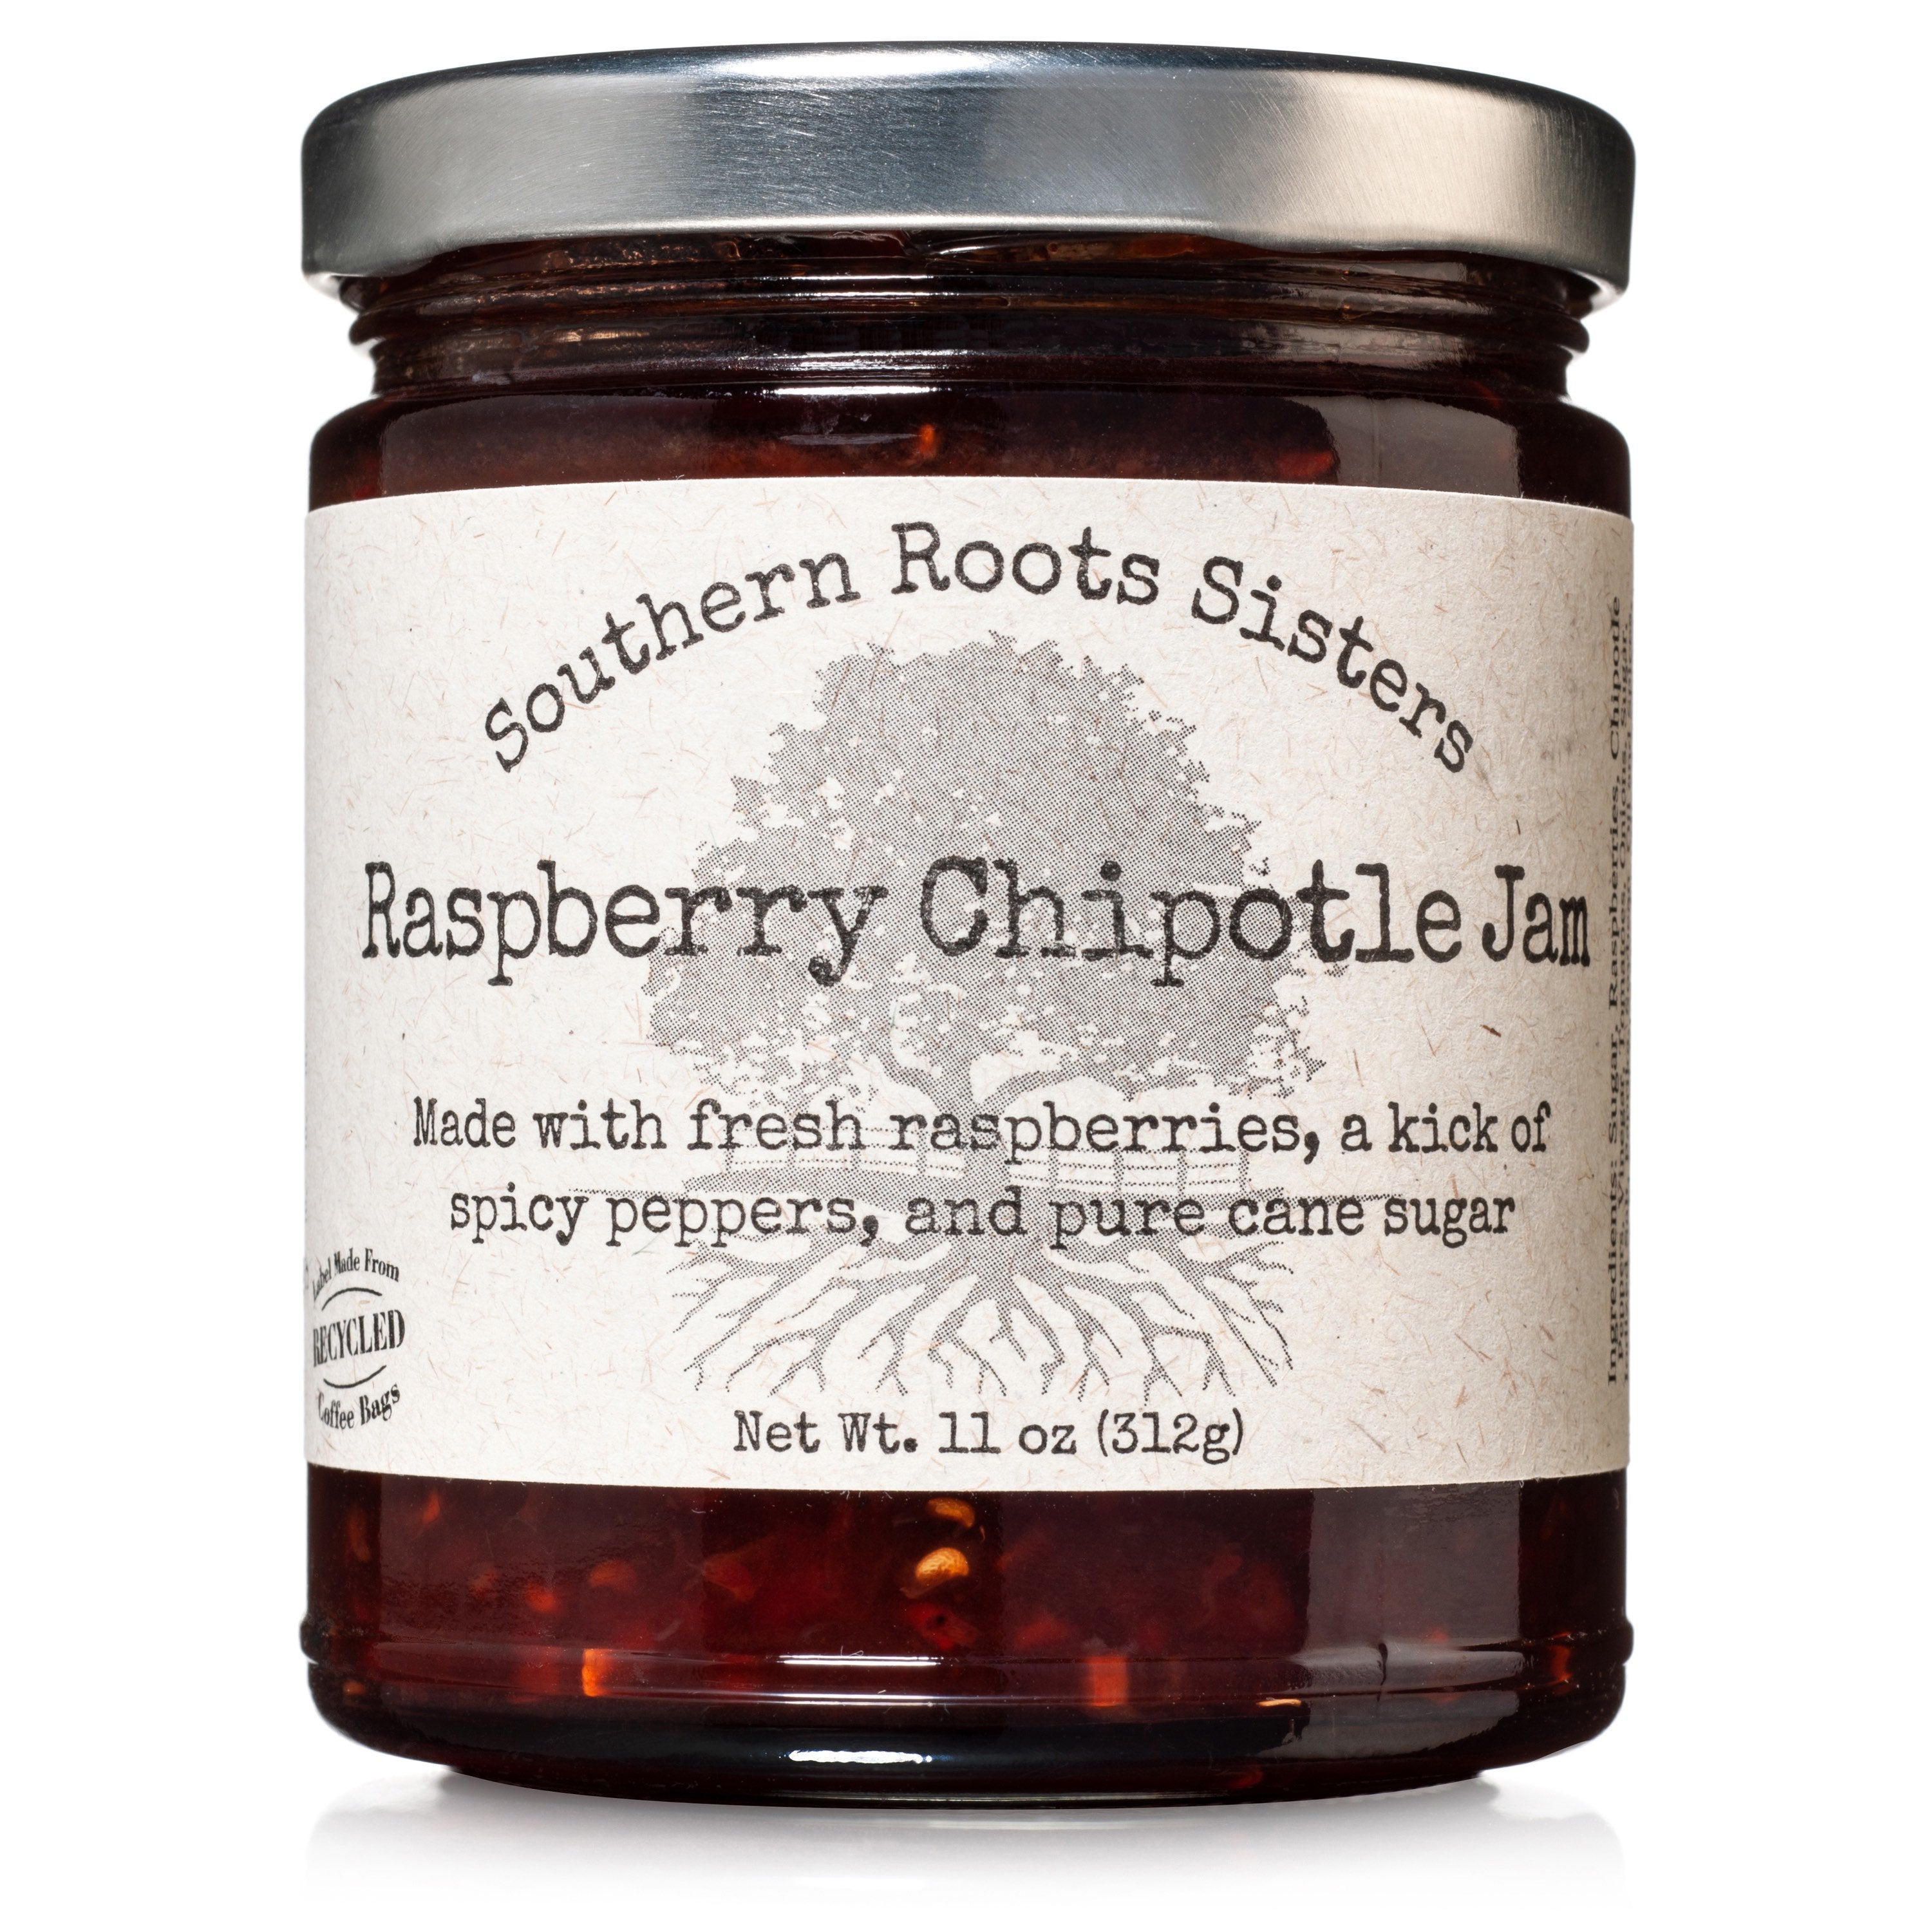 Raspberry Chipotle Finishing Sauce